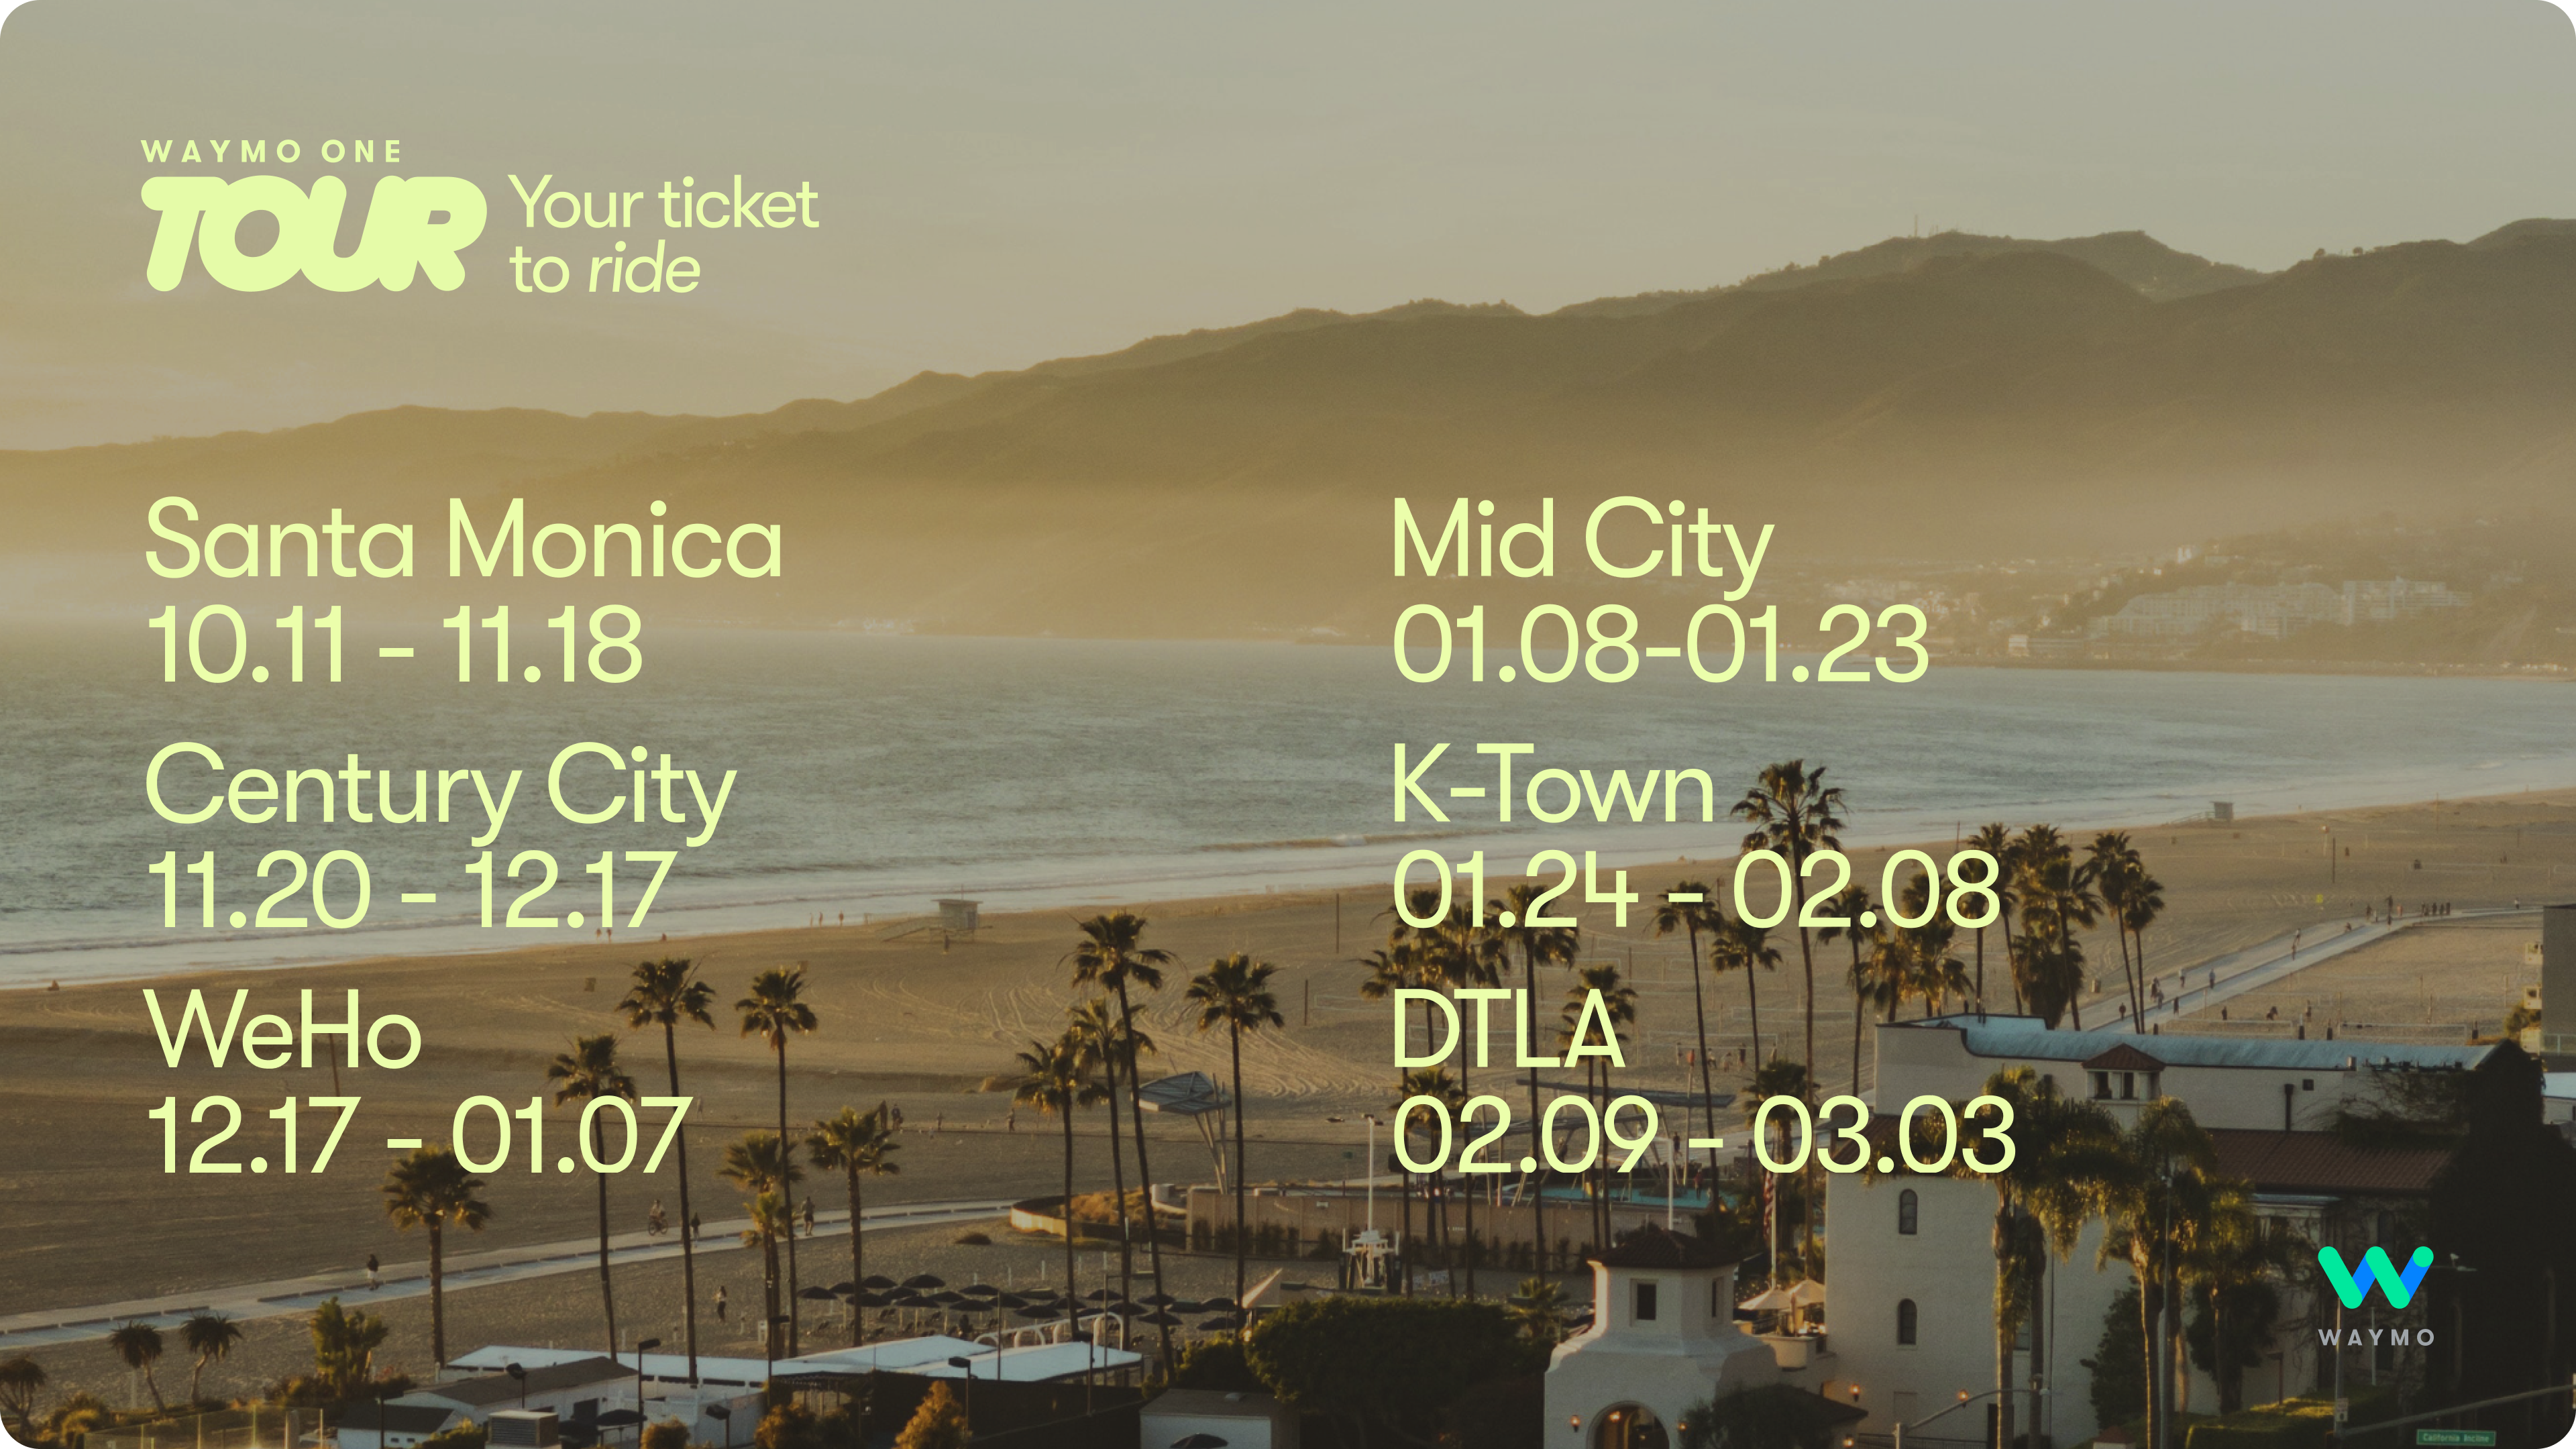 Waymo One Tour Schedule:
Santa Monica: October 11 to November 18
Century City: November 20 to December 17
WeHo: December 17 to January 7
Mid City: January 8 to January 23
K-Town: January 24 to February 8
DTLA: February 9 to March 3